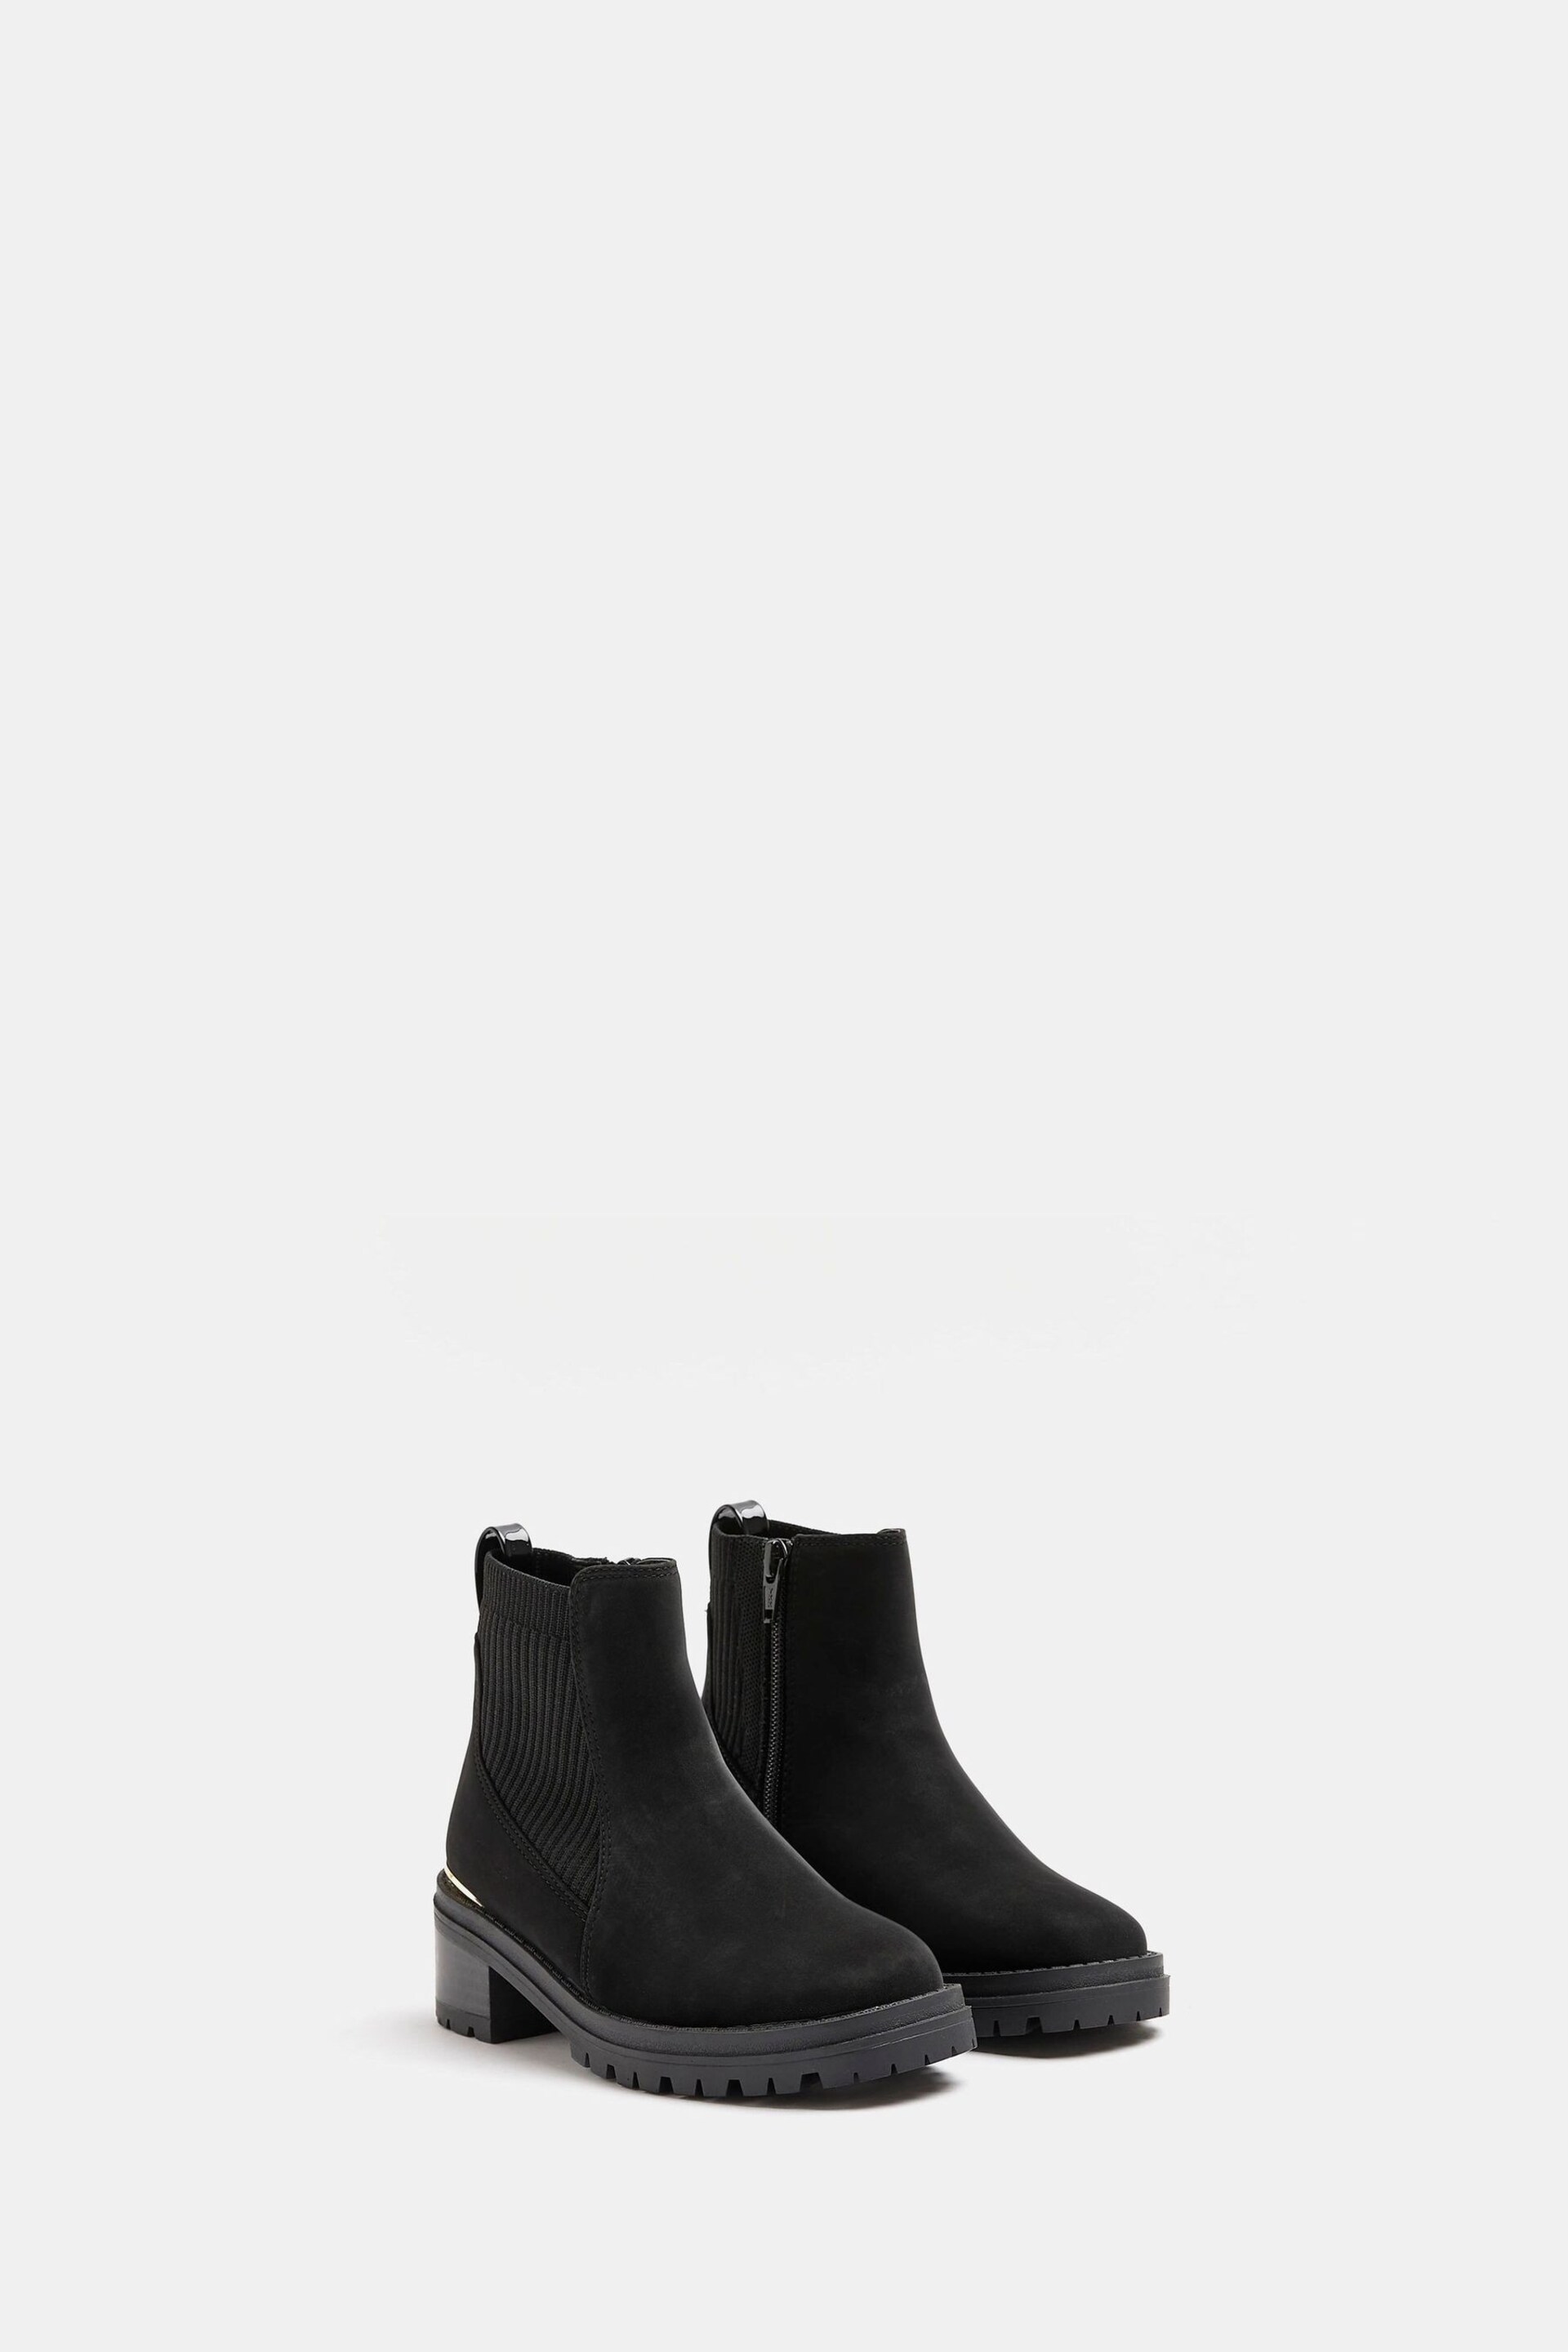 River Island Black Sock Heeled Boots - Image 2 of 4